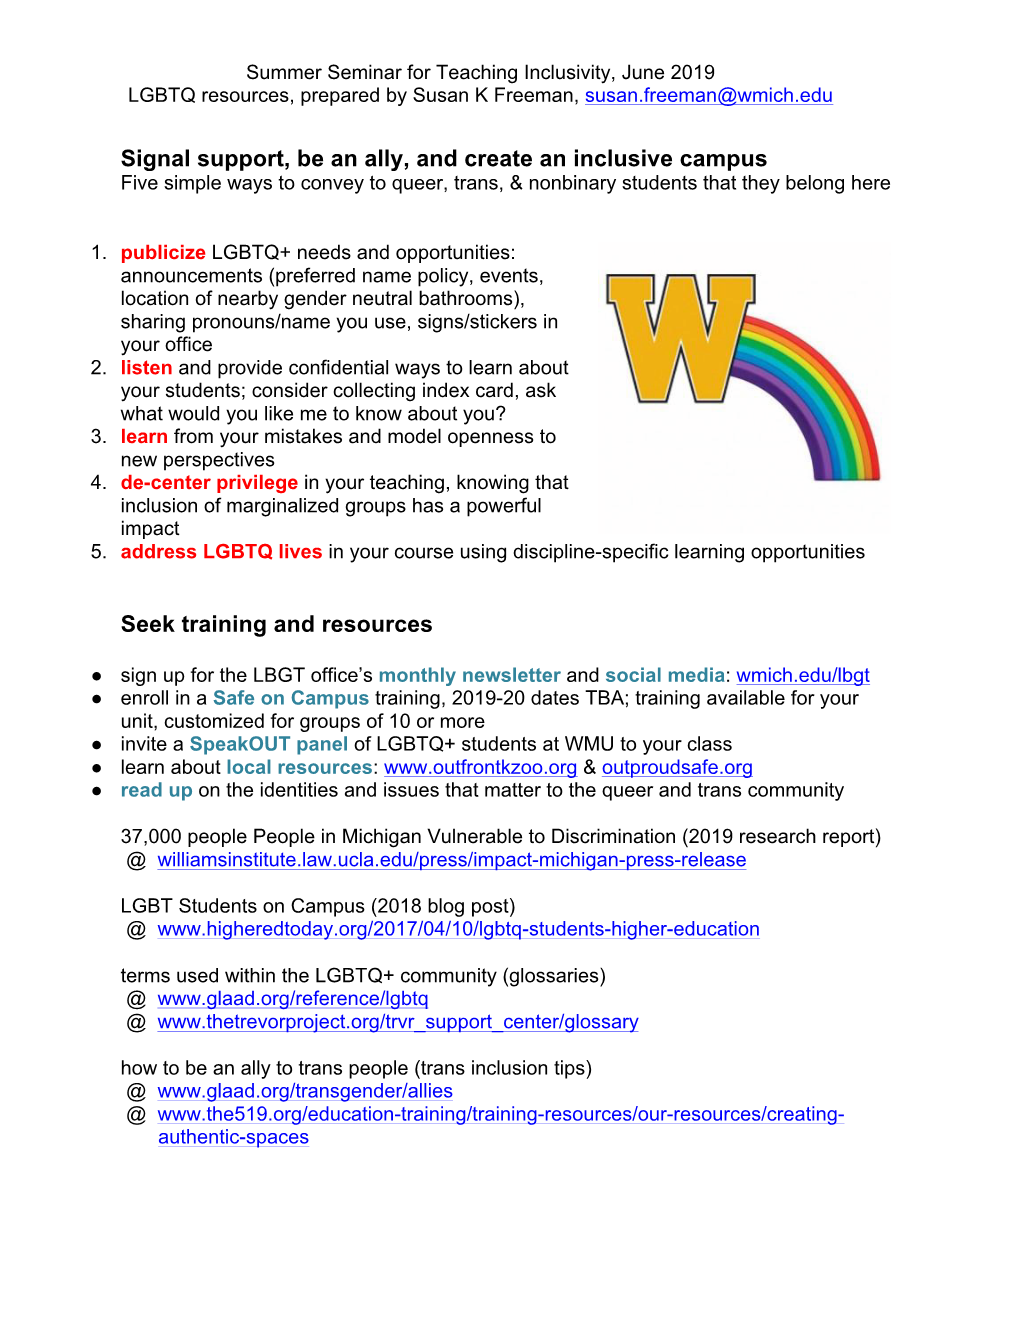 LGBTQ Resources, Prepared by Susan K Freeman, Susan.Freeman@Wmich.Edu